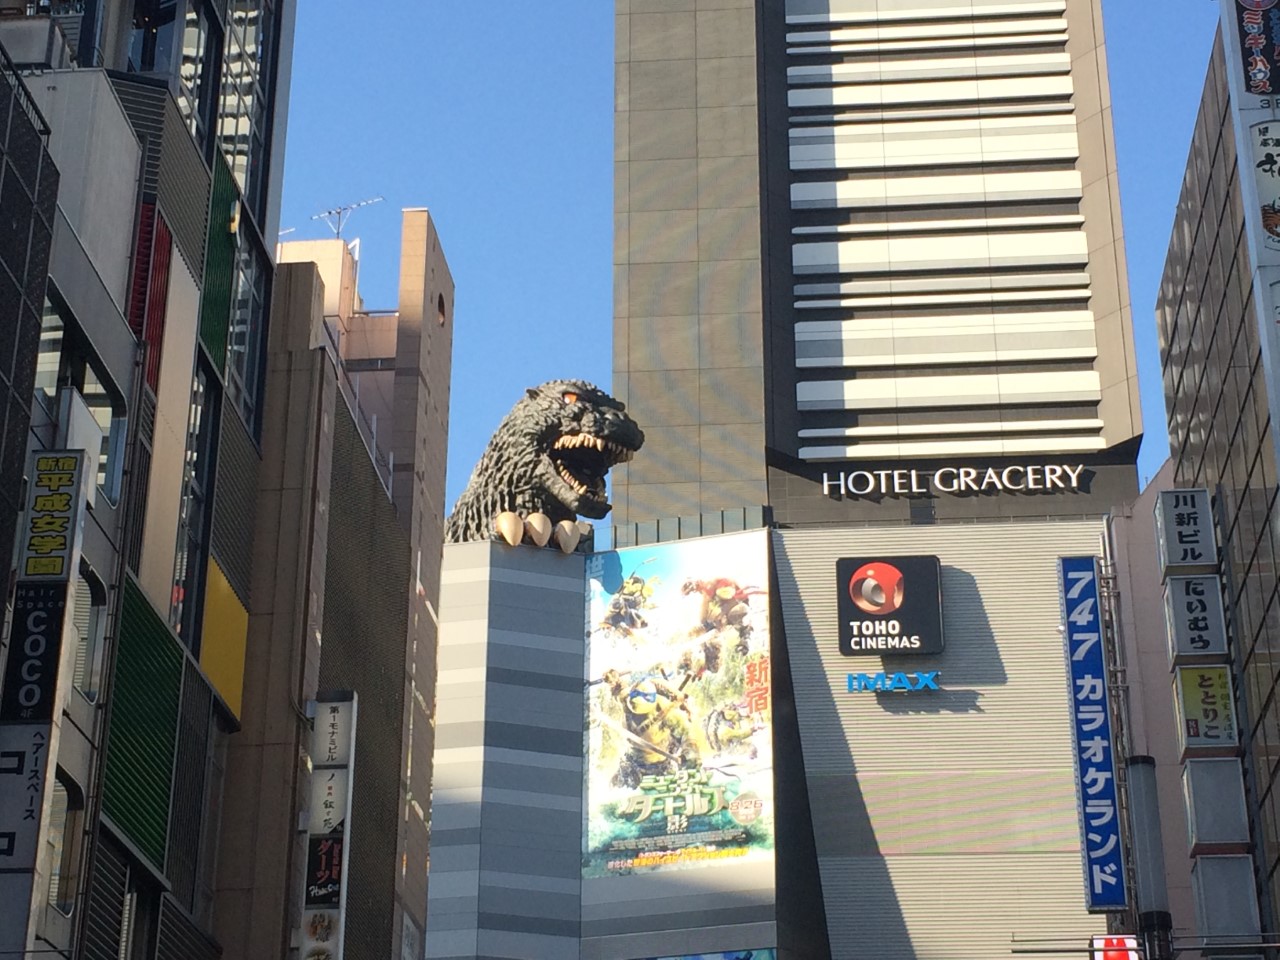 okyo Godzilla figure atop the Toho Cinema.